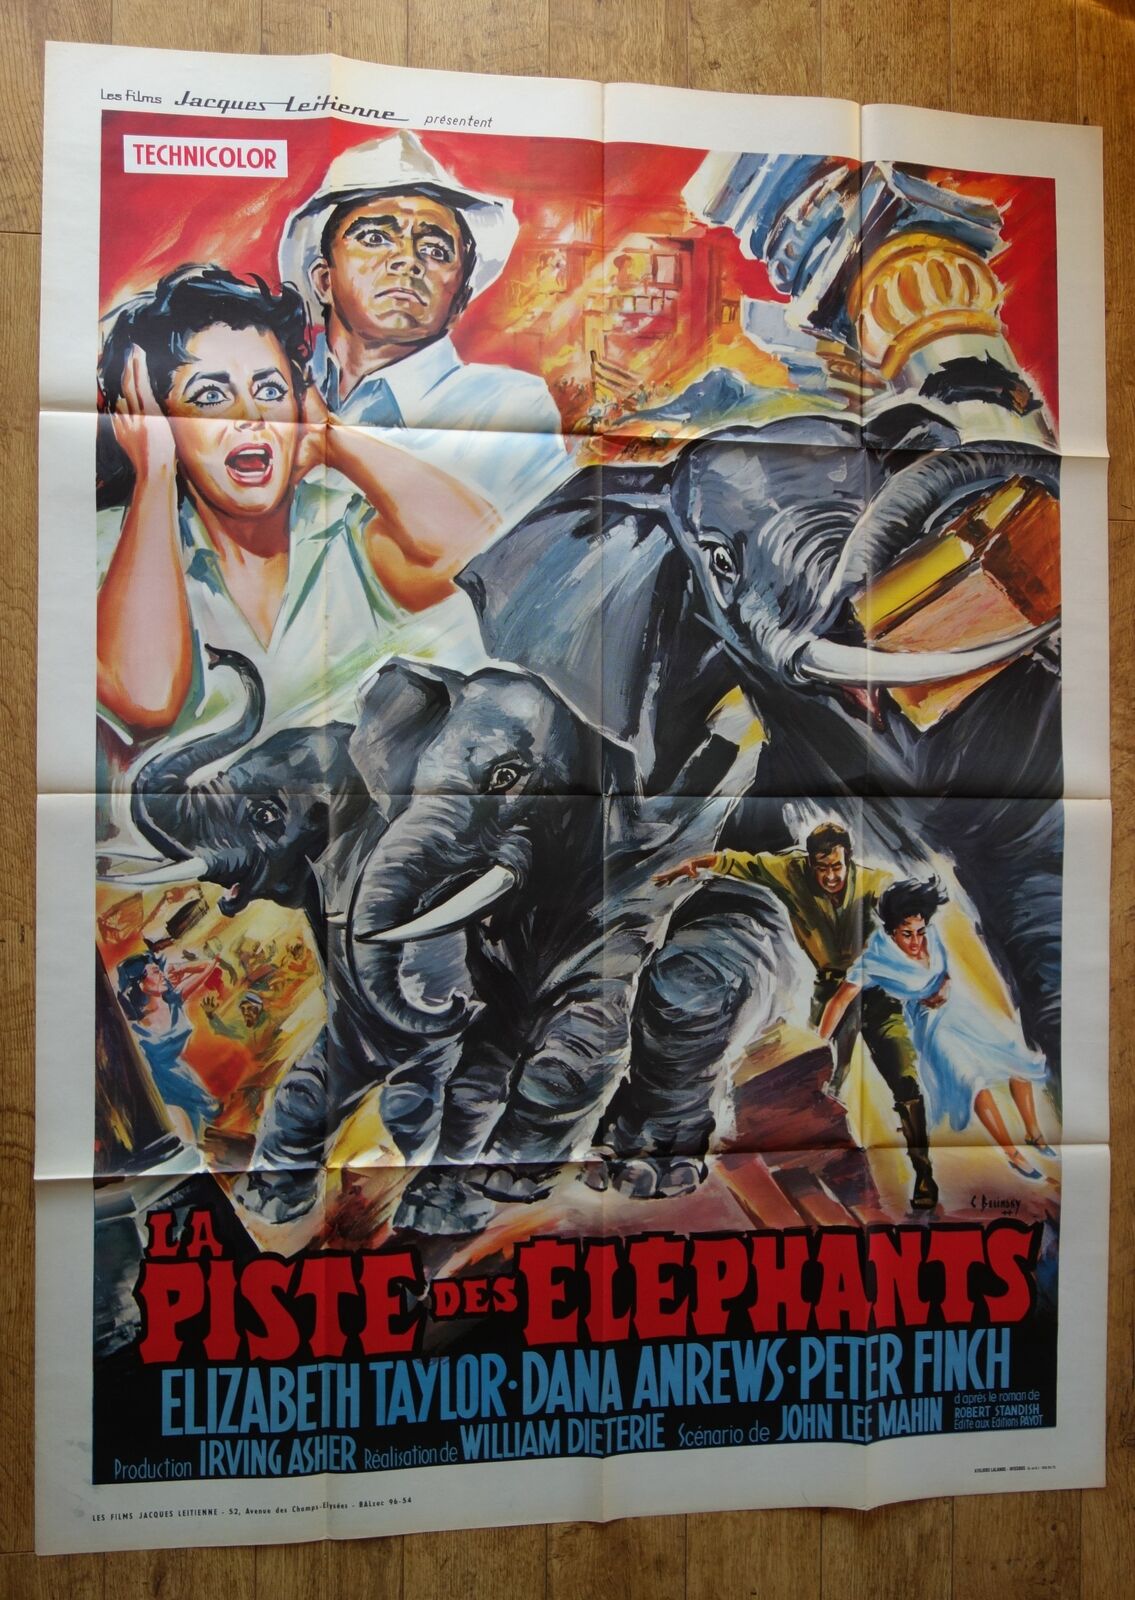 ELEPHANT WALK Elizabeth Taylor original LARGE french movie poster R60s